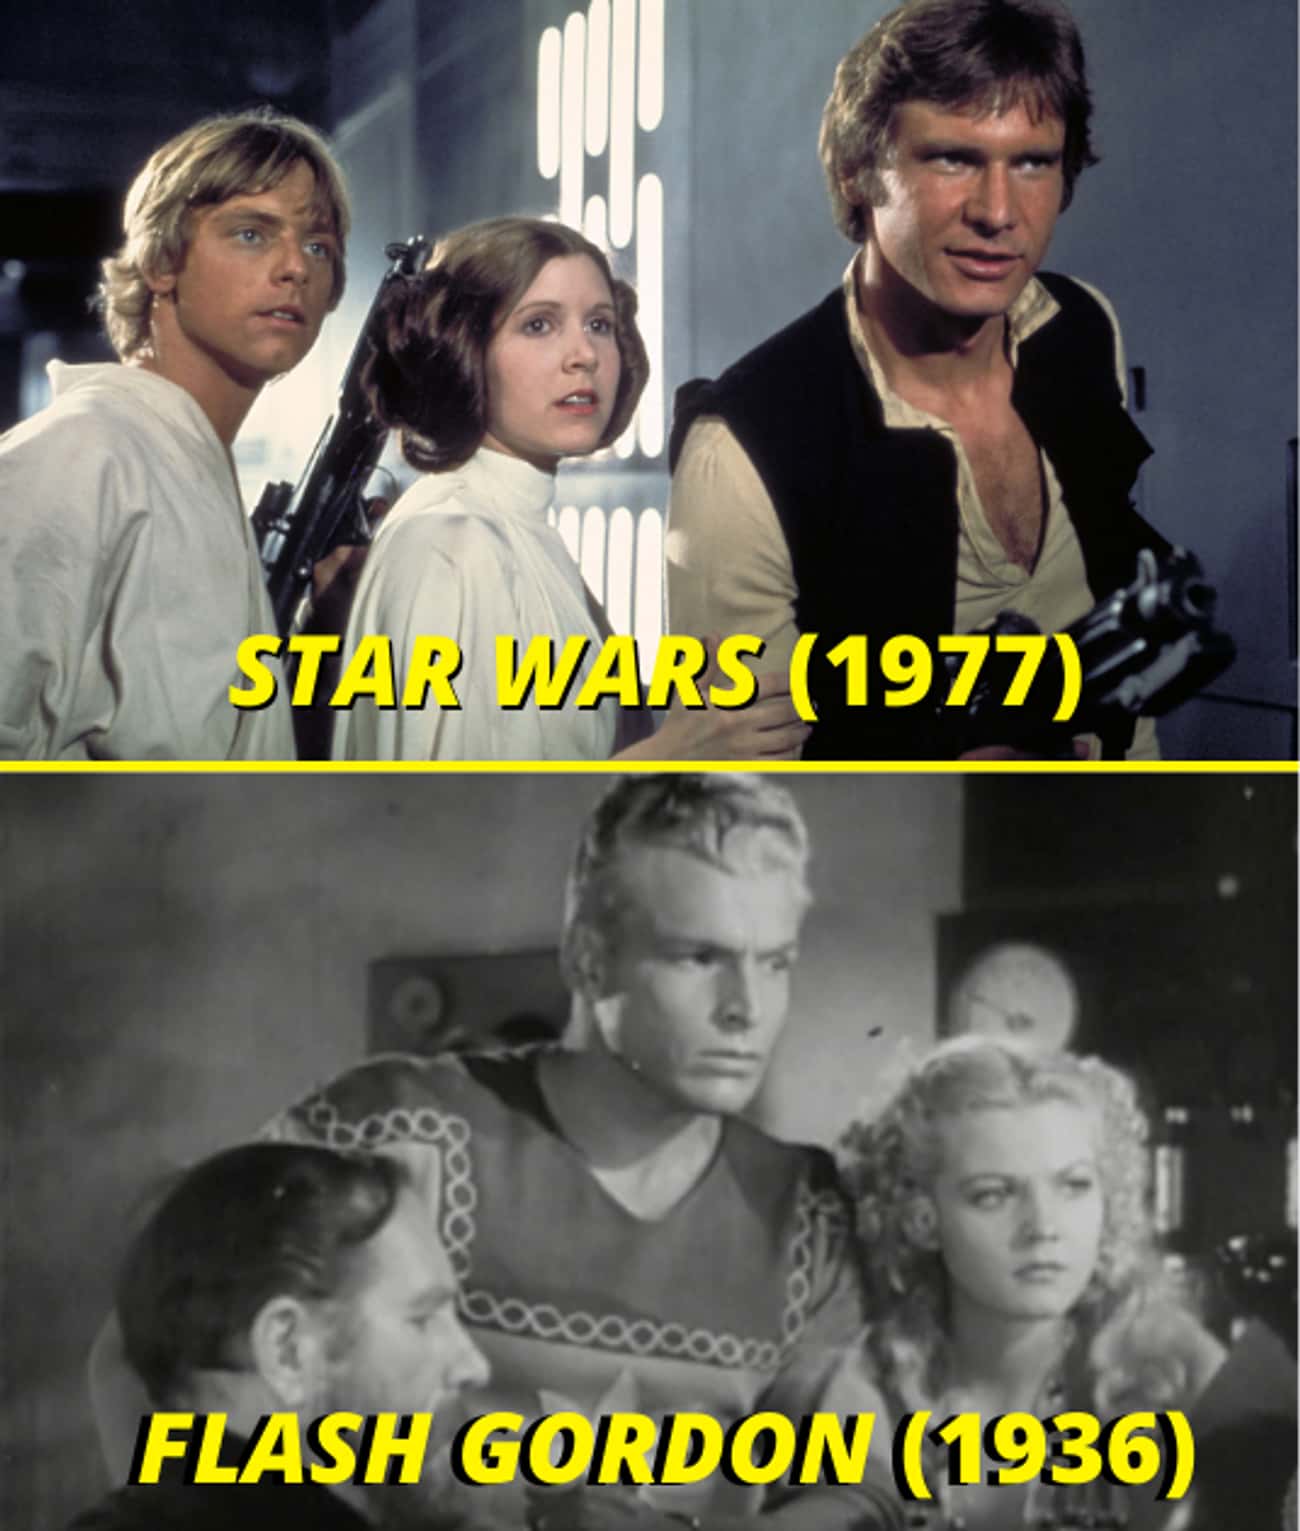 'Star Wars' (1977) And 'Flash Gordon' (1936)